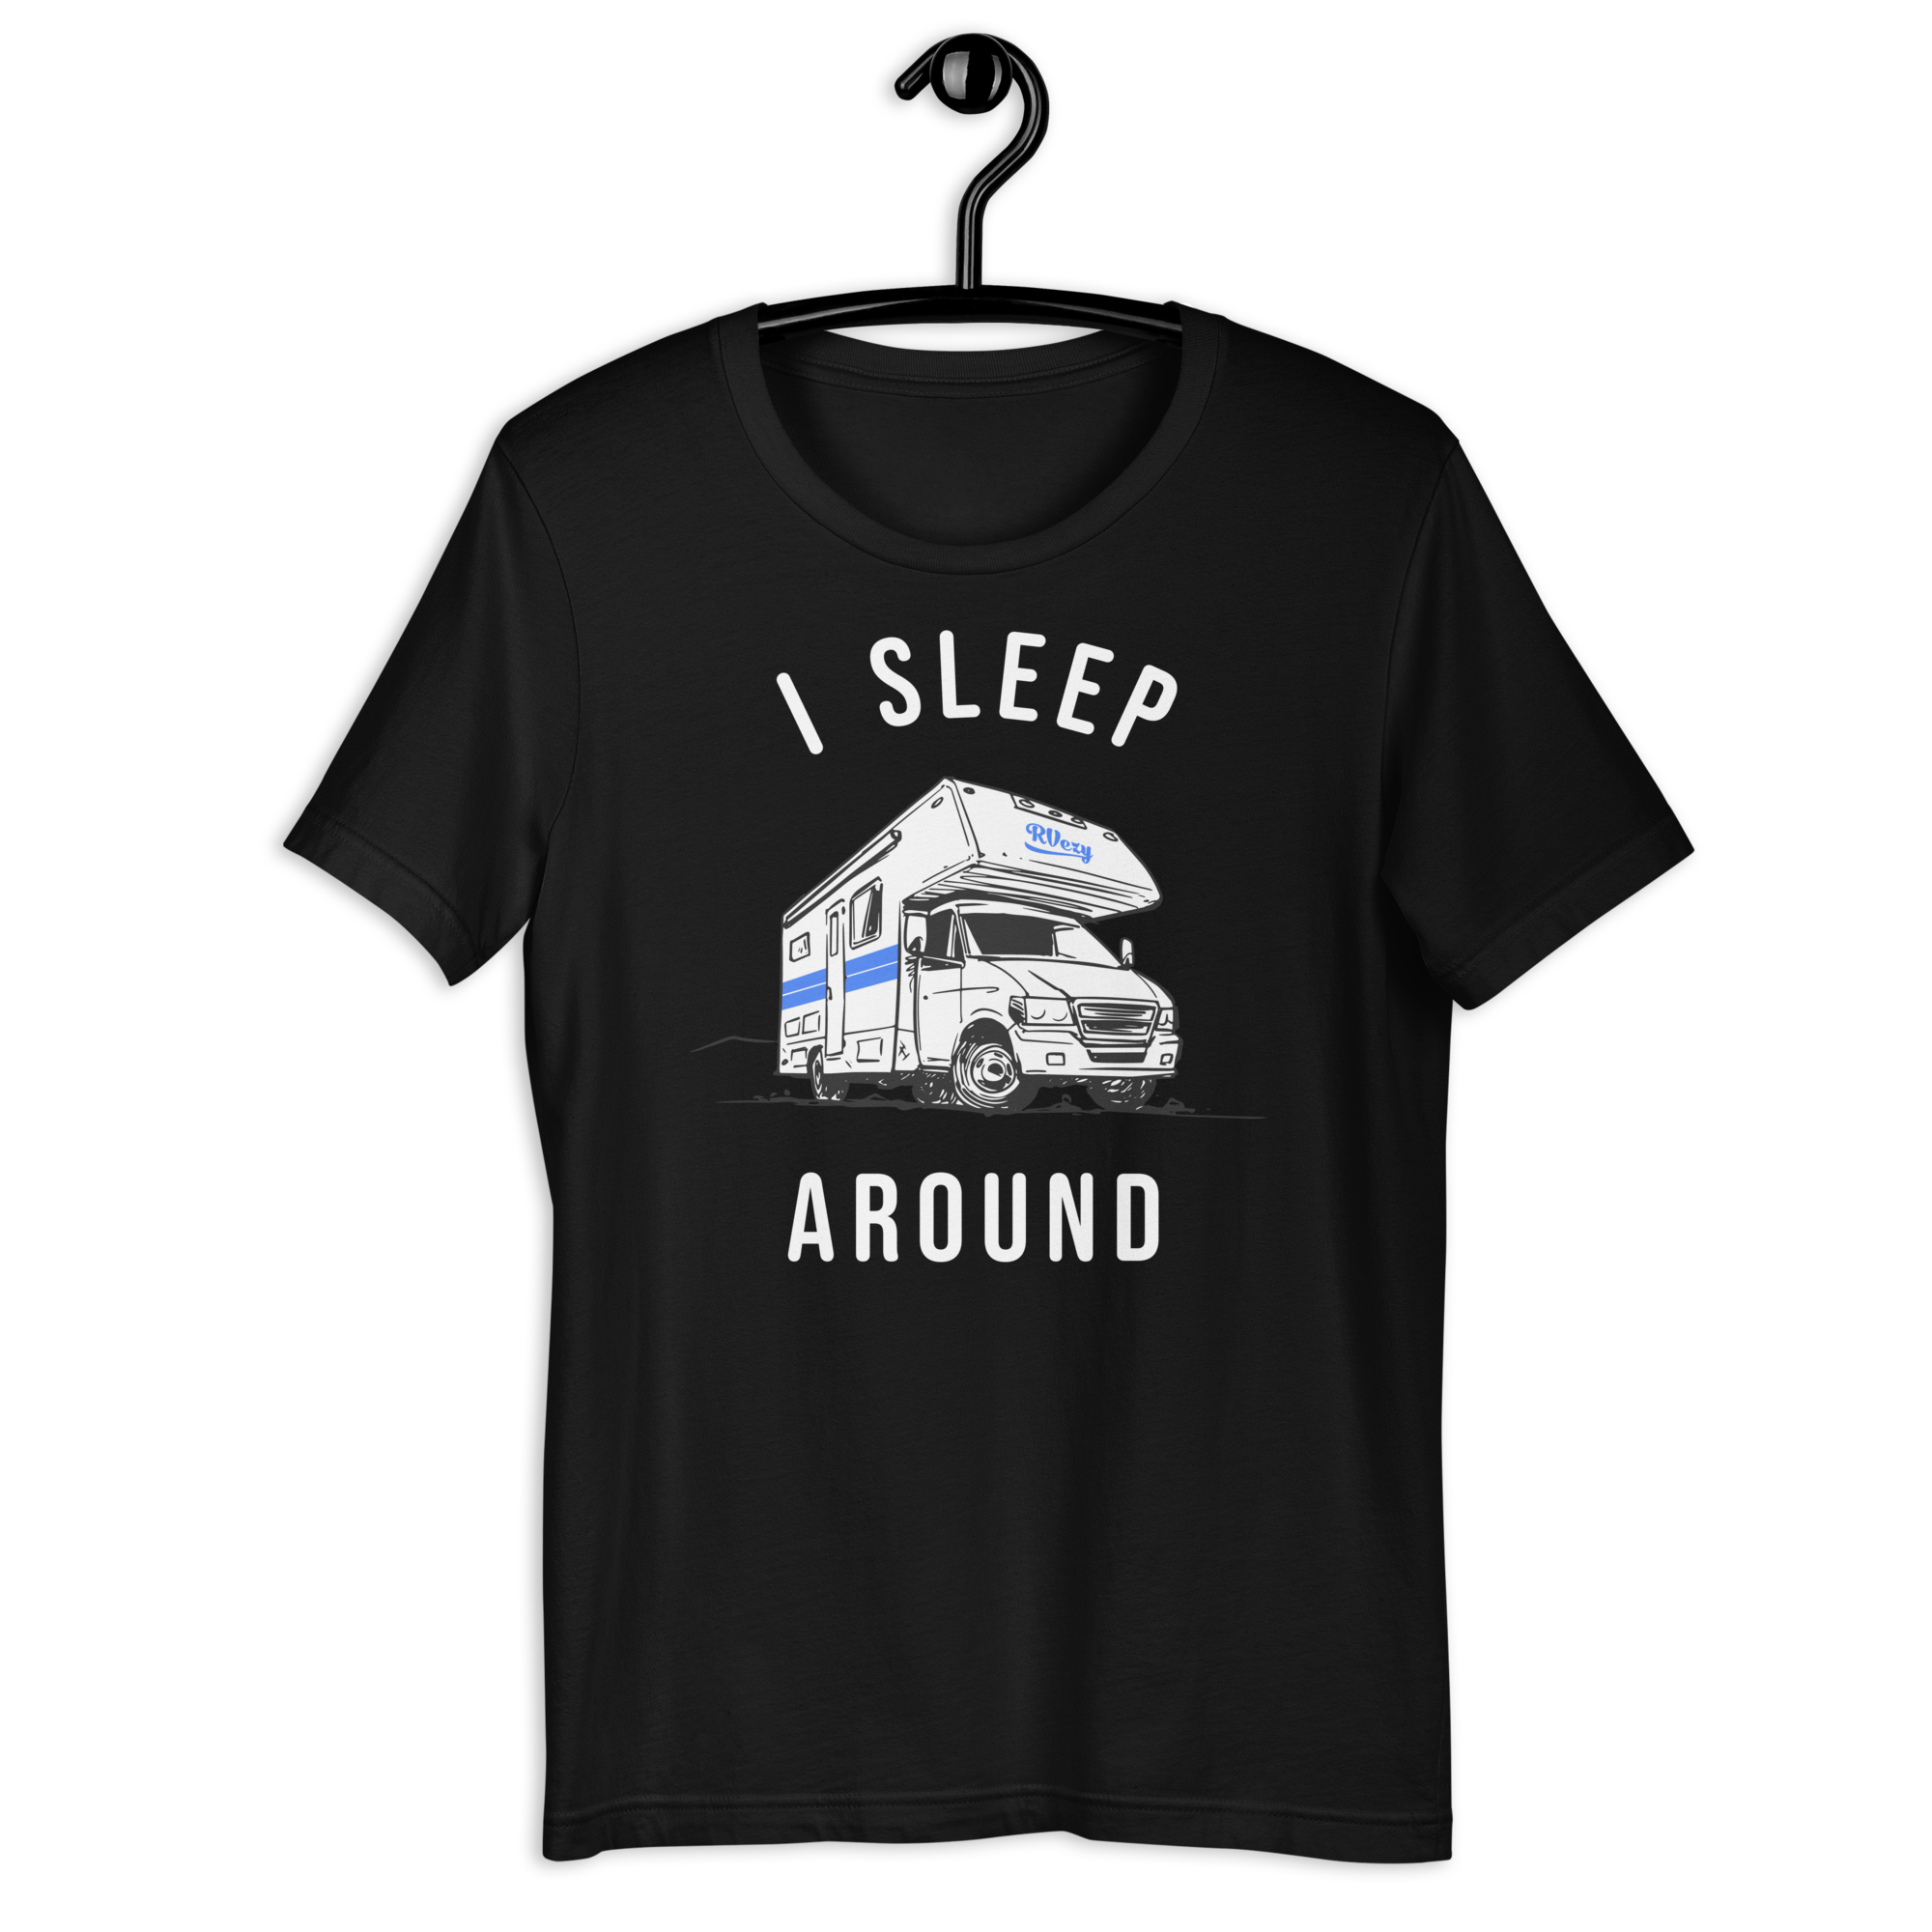 I Sleep Around tee